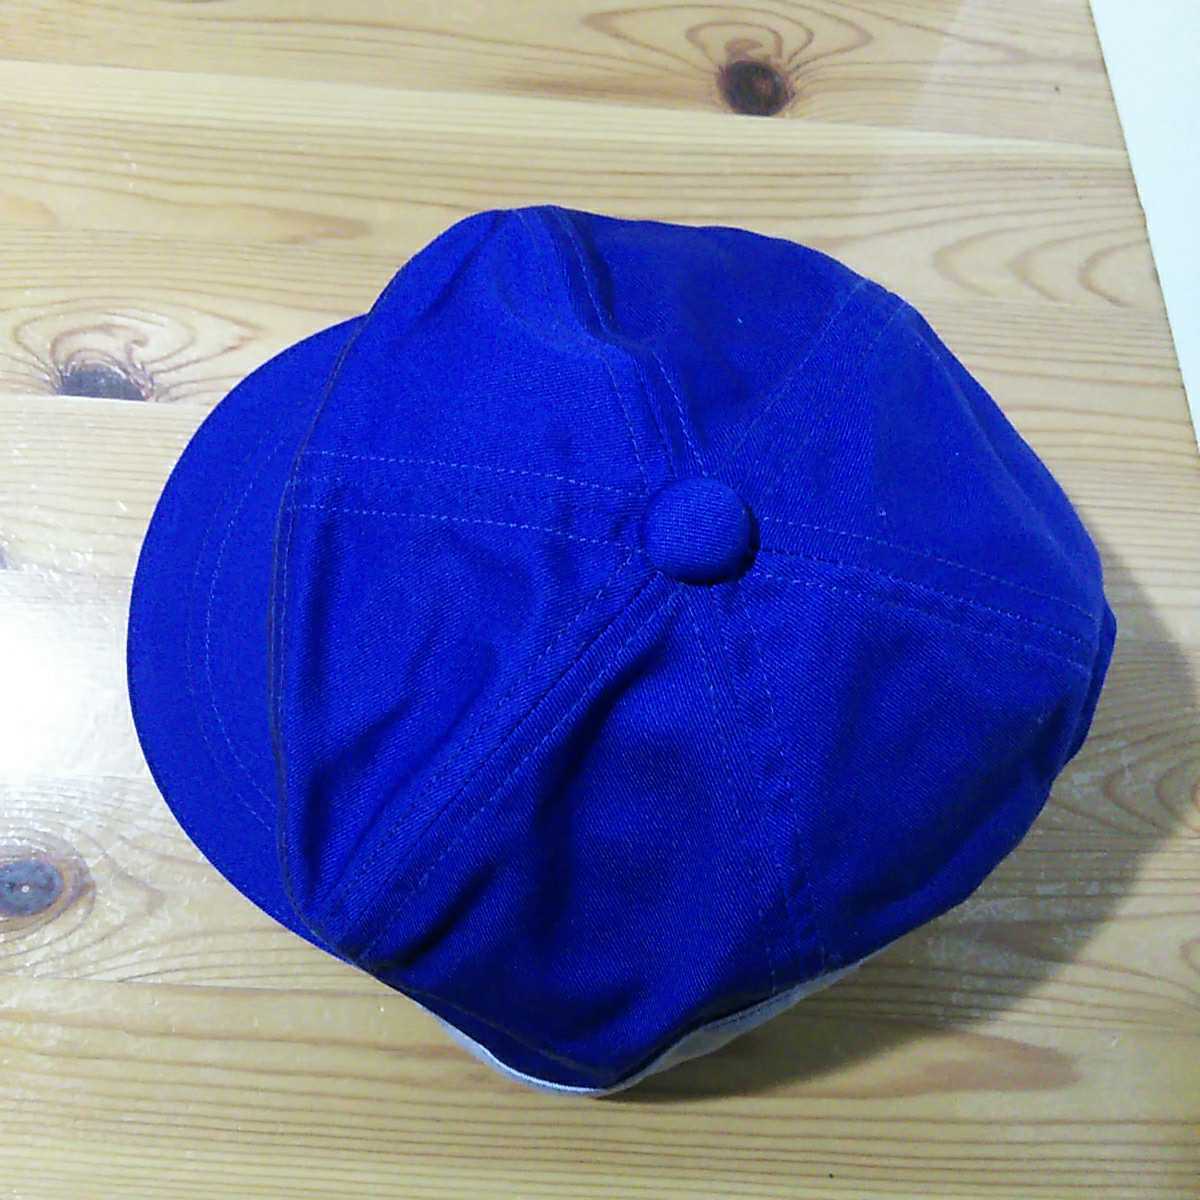 ISUZU Isuzu шляпа колпак синий серия 